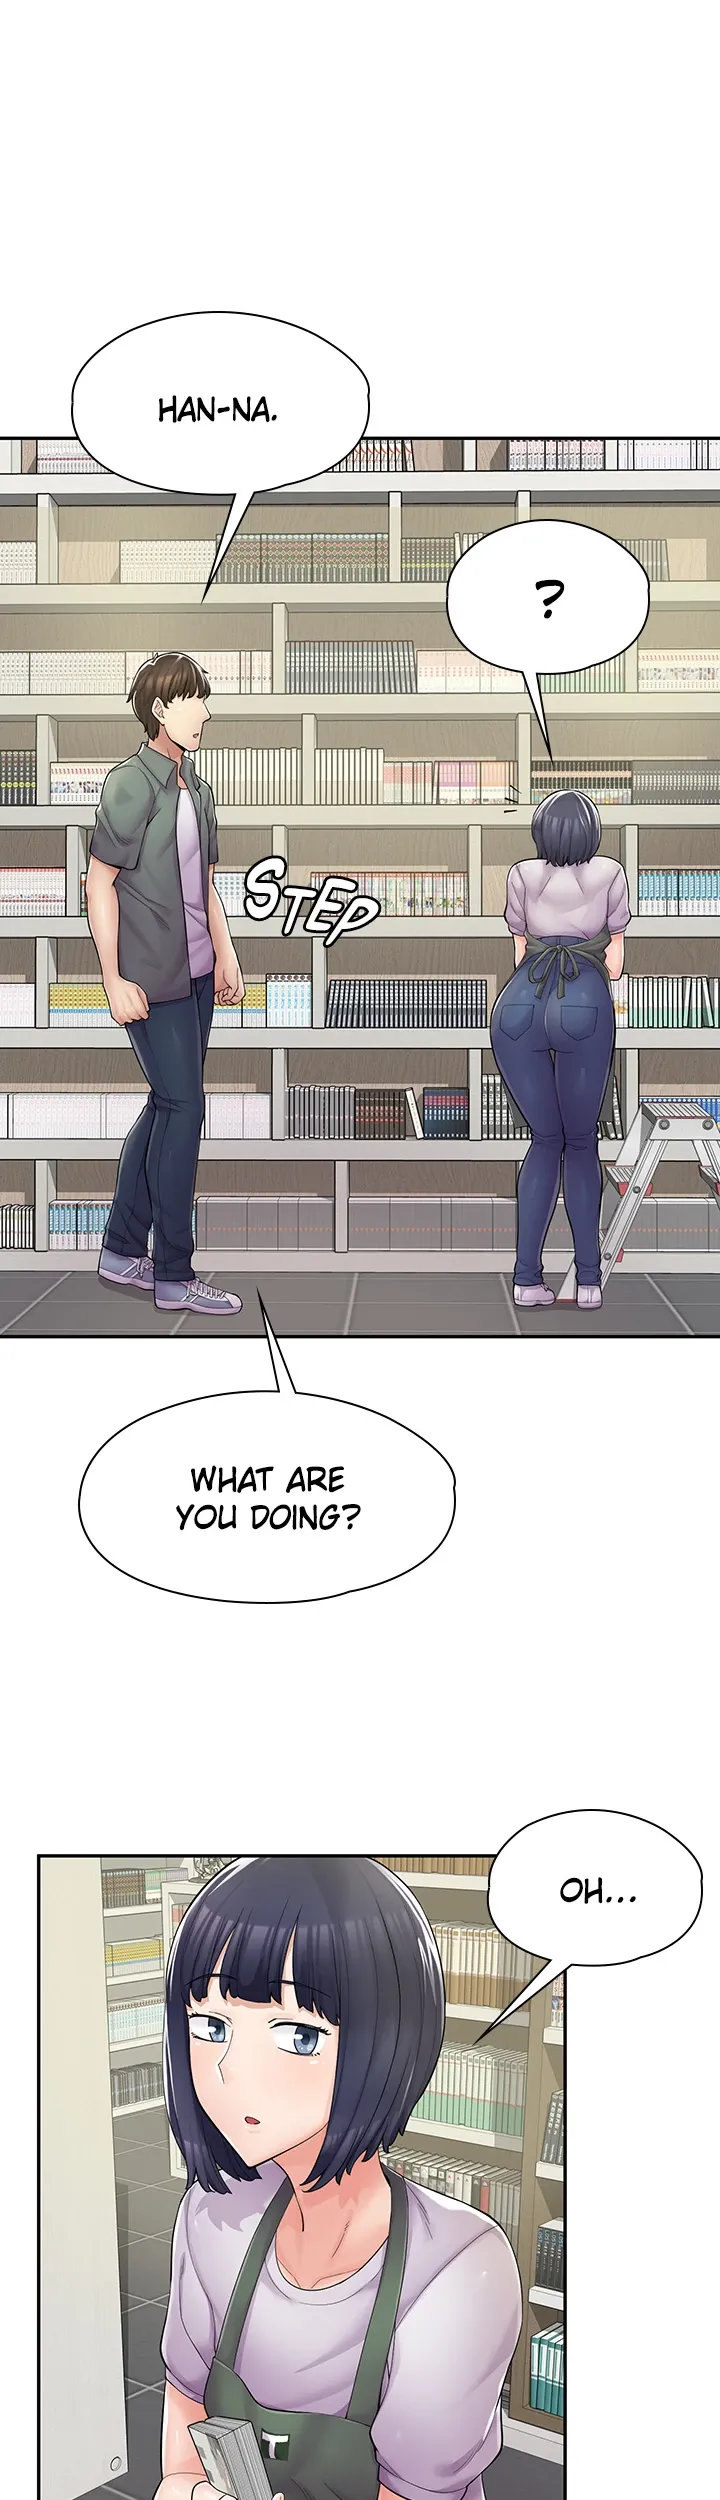 Erotic Manga Café Girls - Chapter 5 Page 4